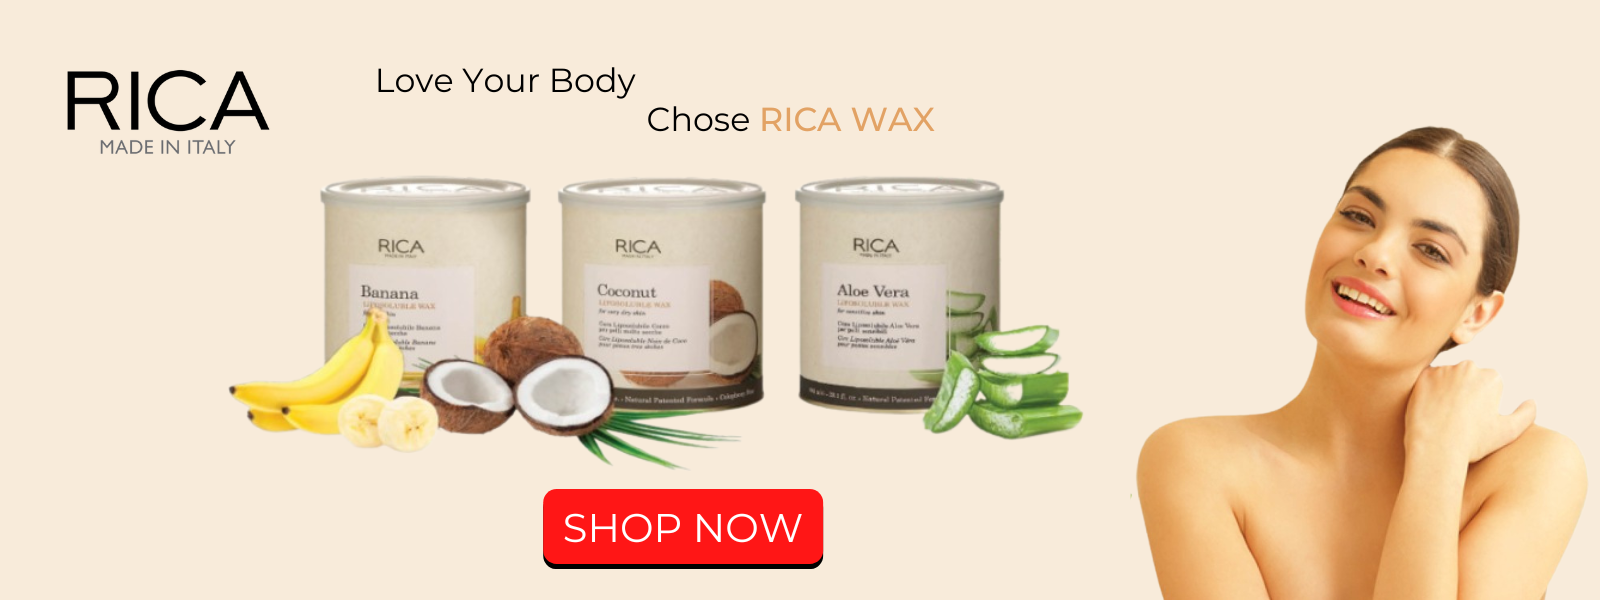 Rica Wax Life Style Express - Online Cosmetics Store - Karachi Pakistan